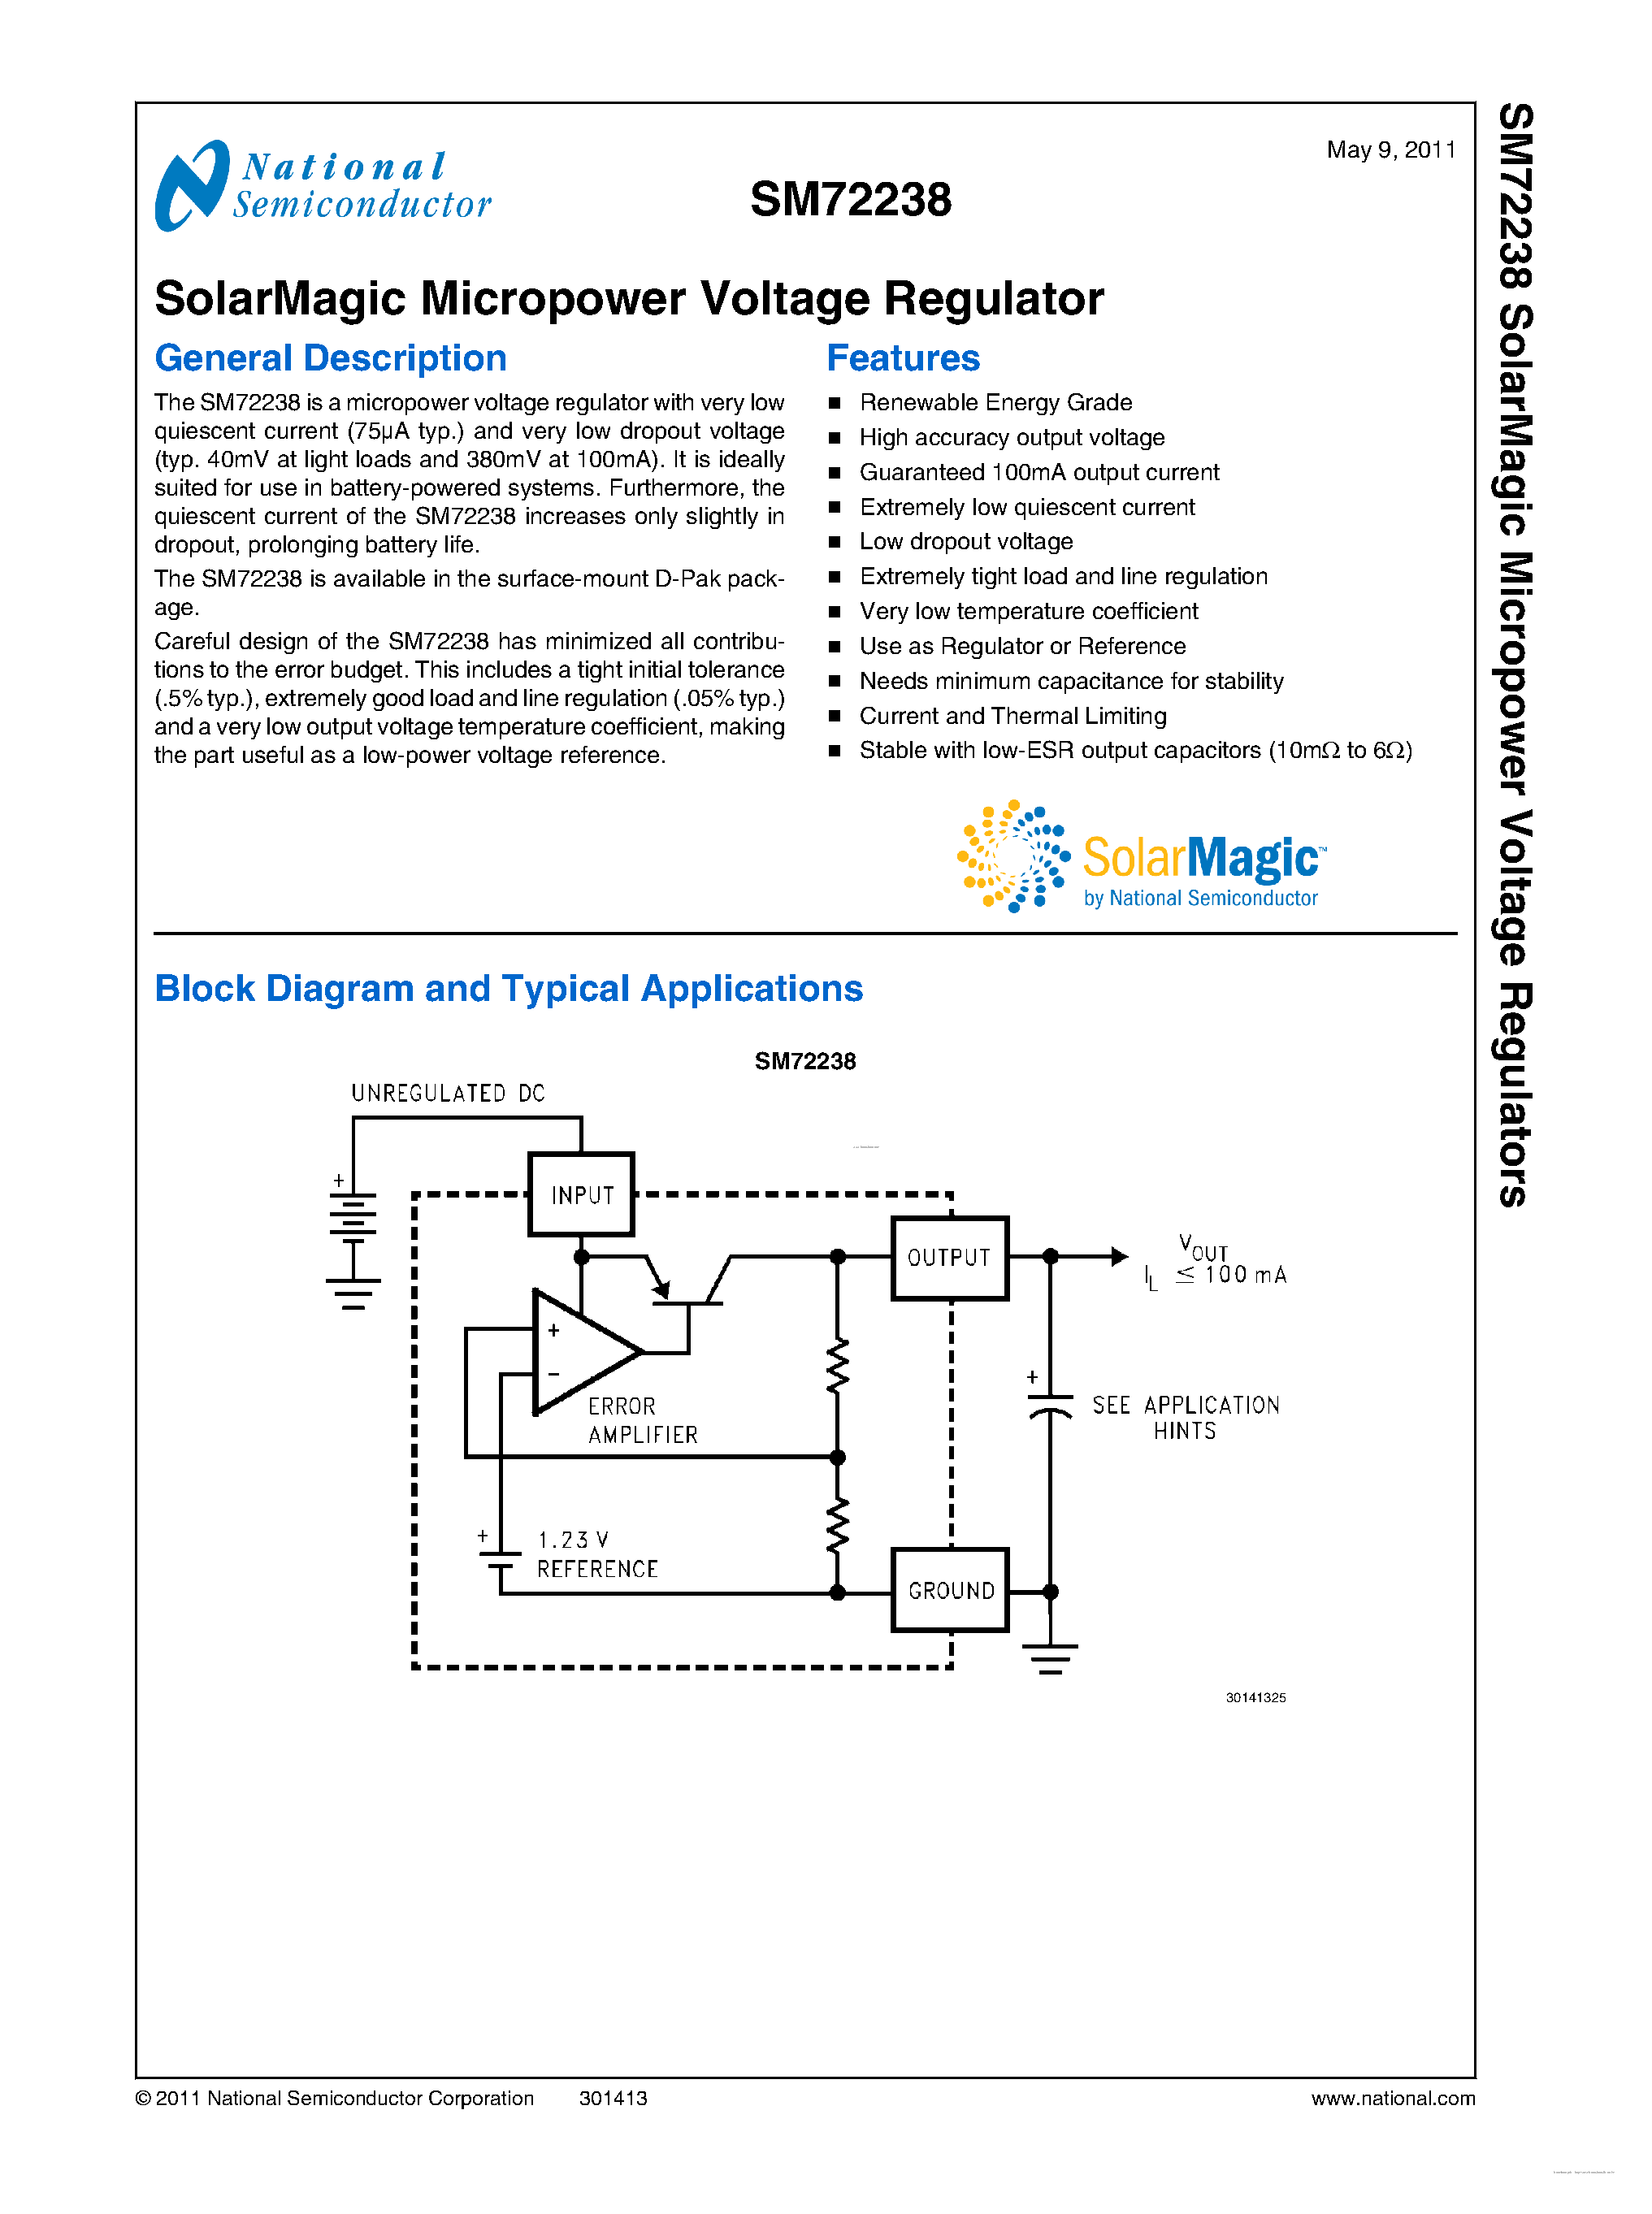 Datasheet SM72238 - SolarMagic Micropower Voltage Regulator page 1